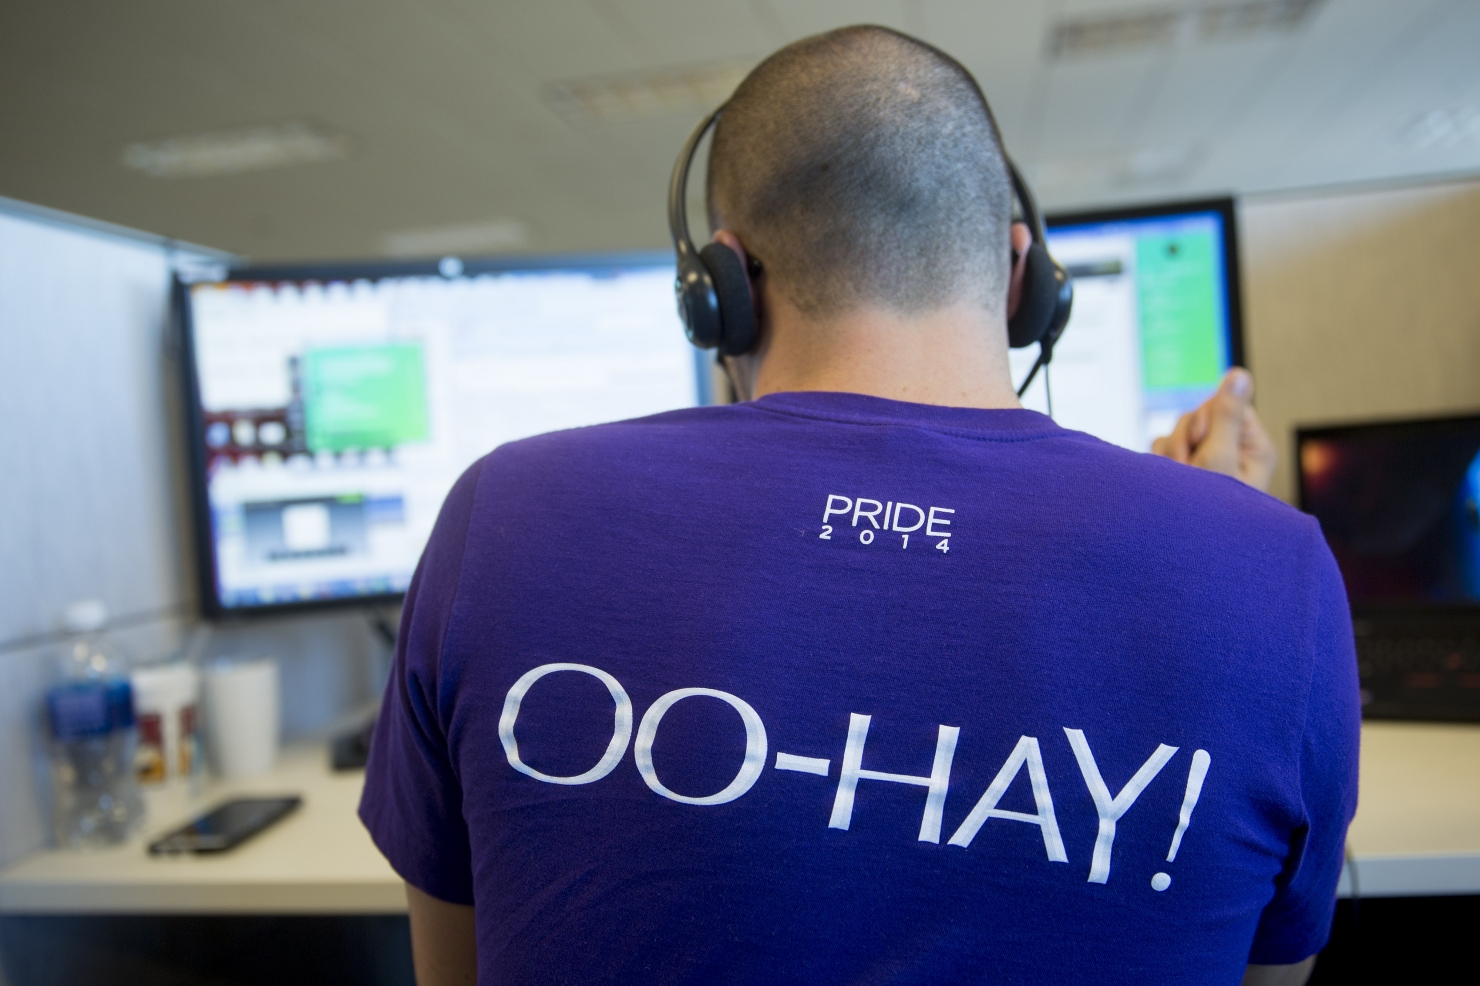 Yahoo!, victima unui atac informatic masiv în 2014